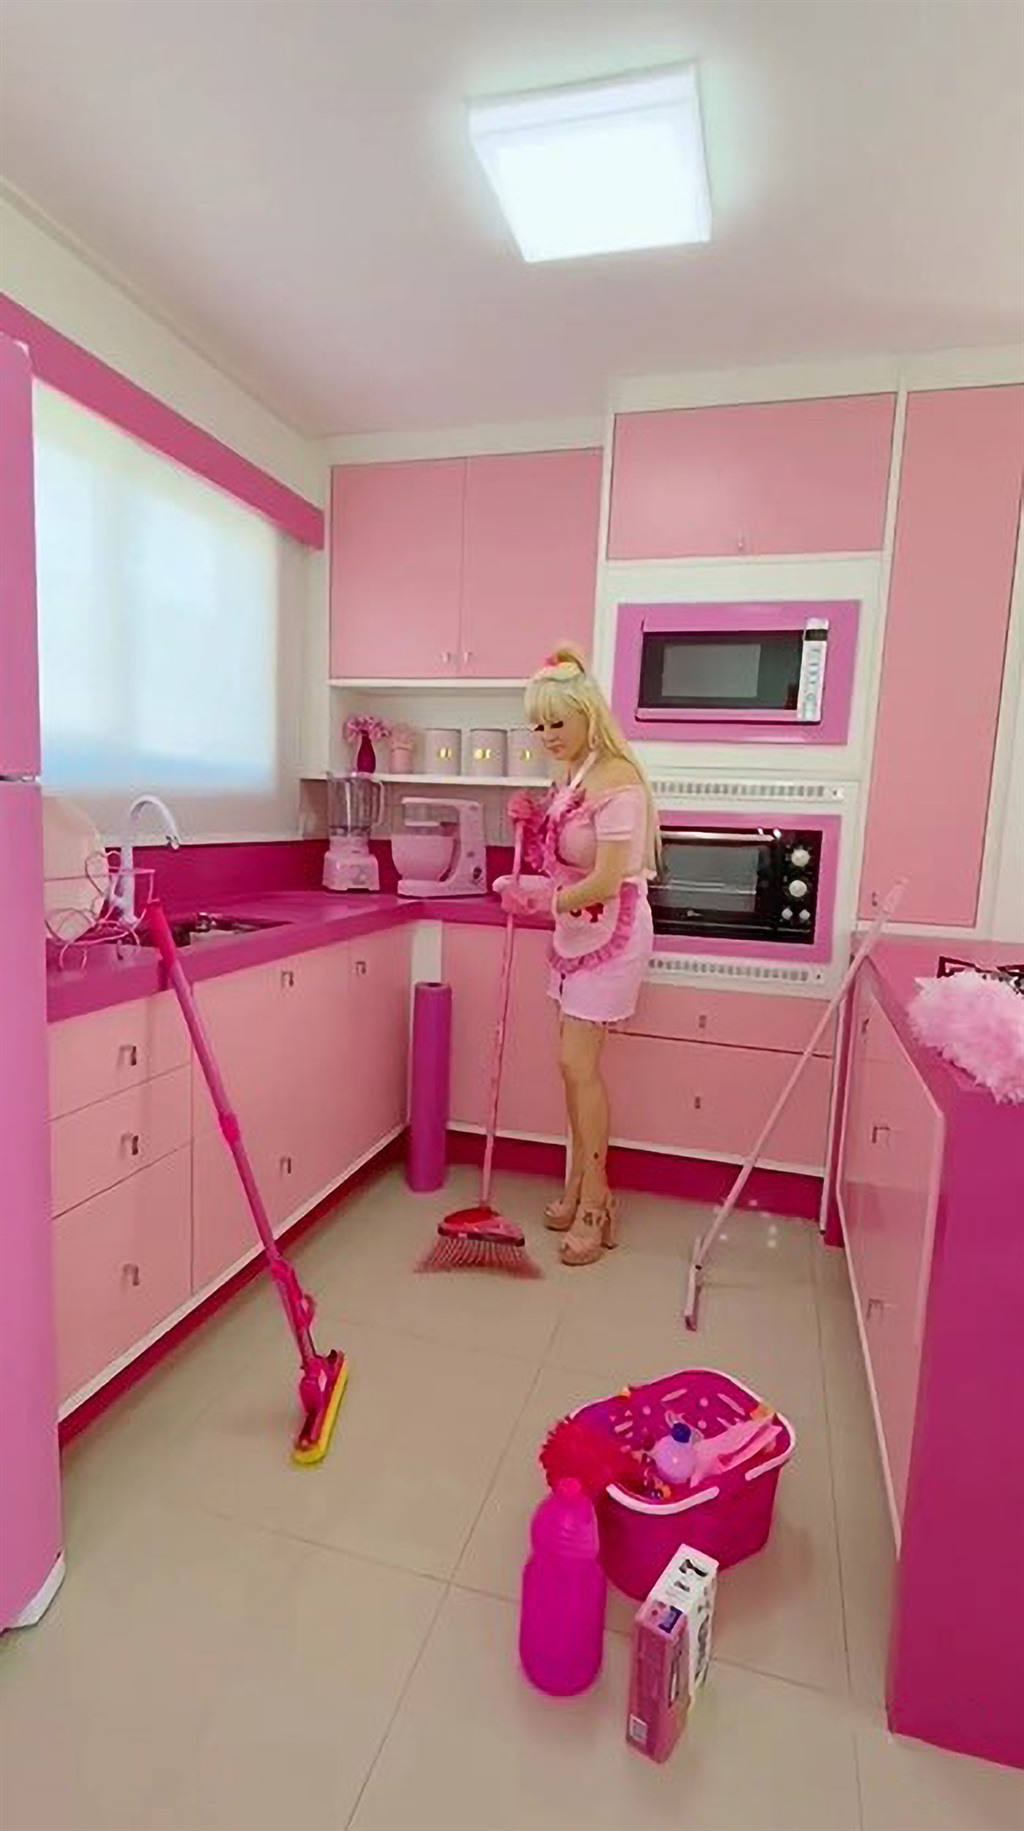 Bruna Carolina Peres, barbie, pink, brazil, doll